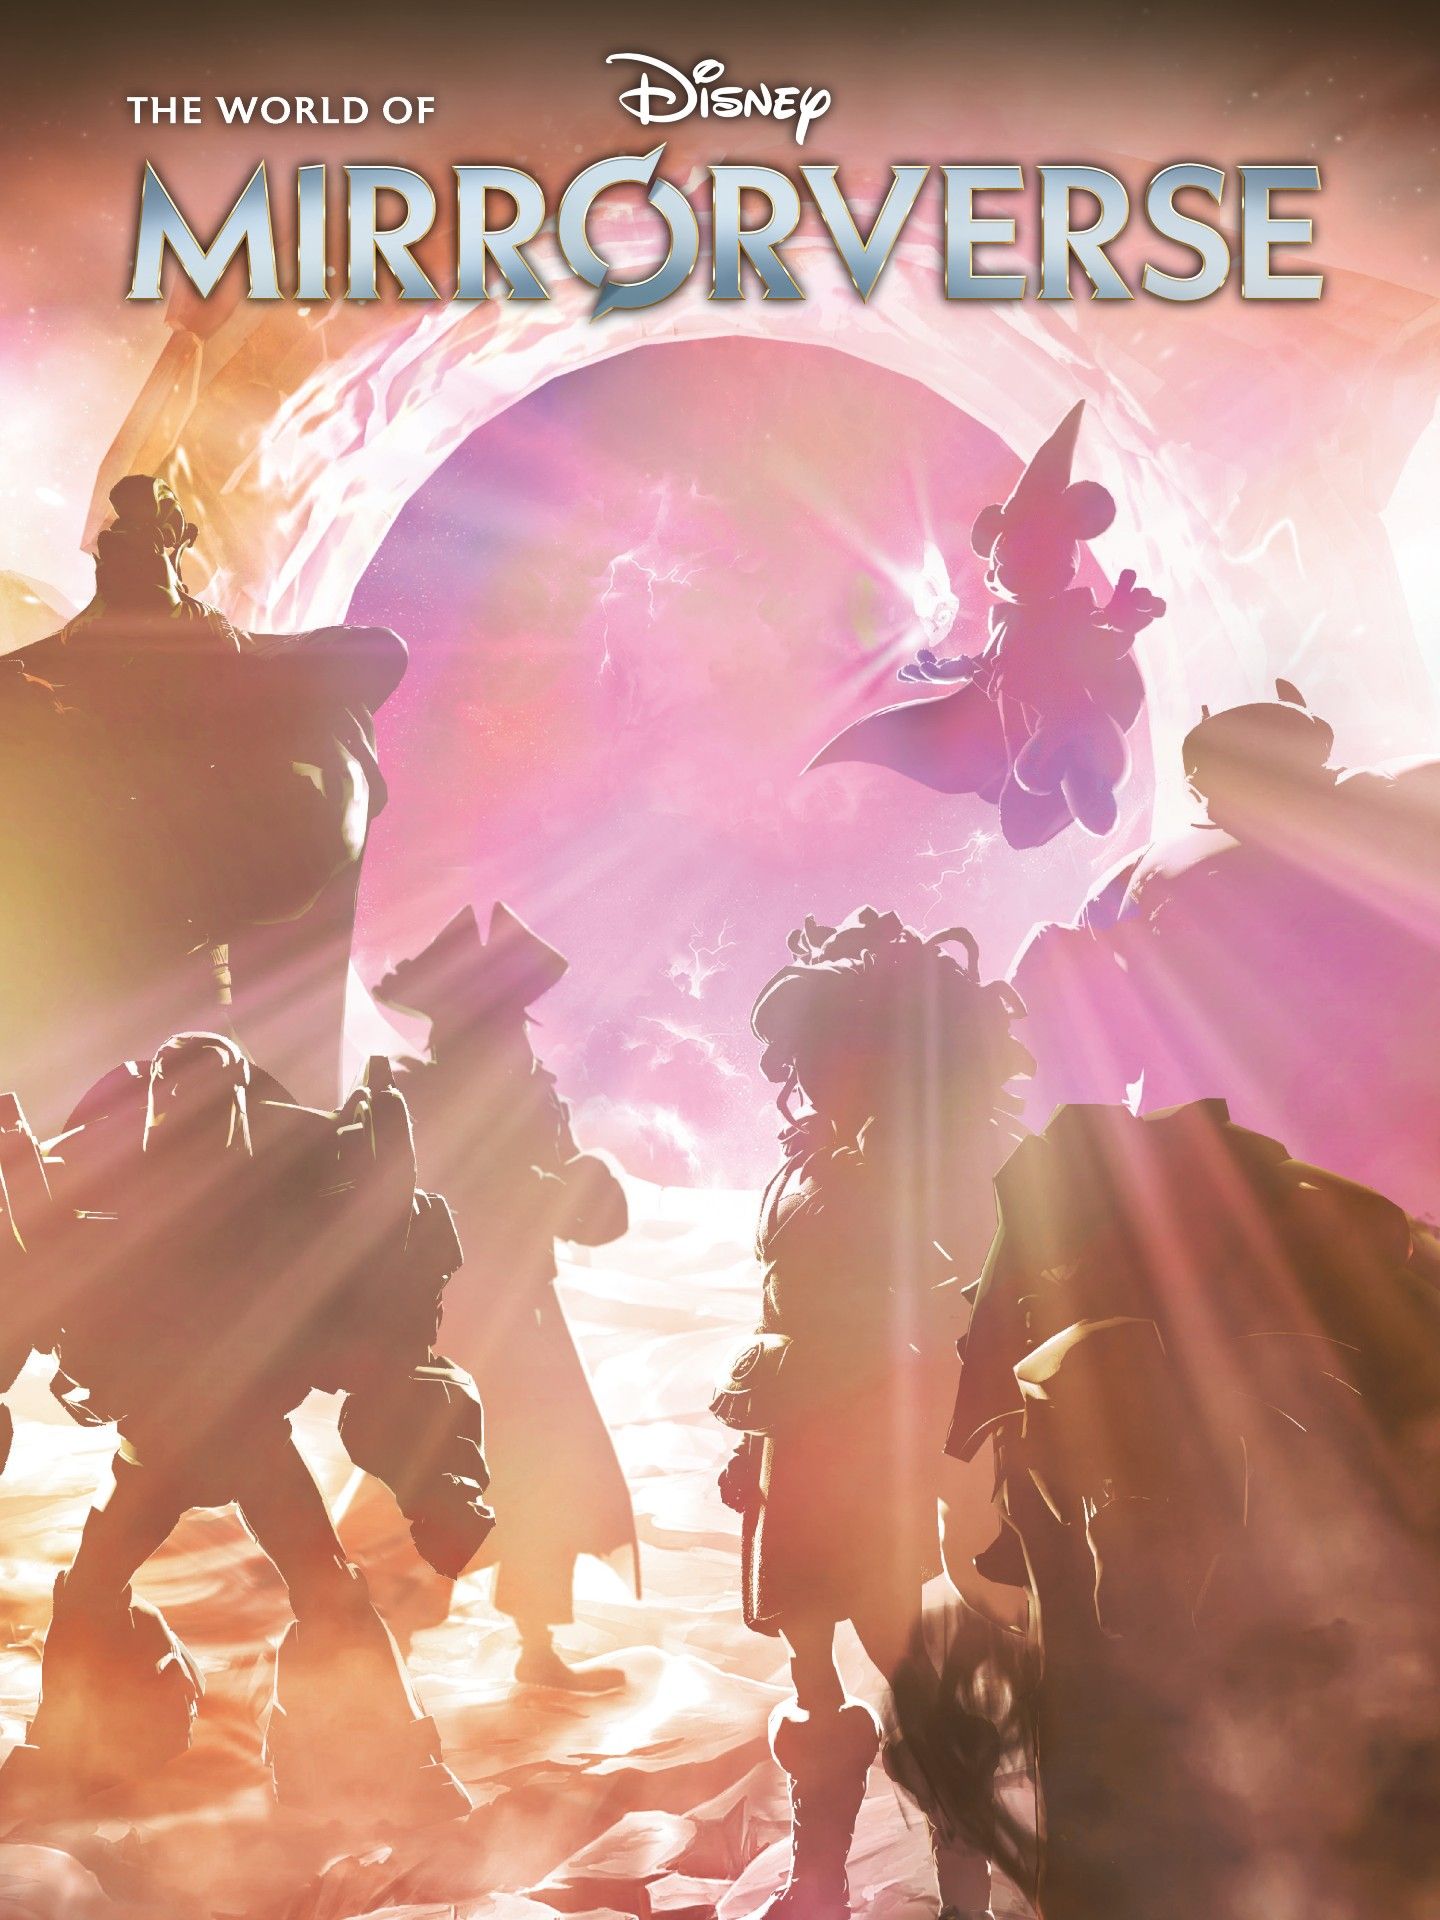 World of Disney Mirrorverse cover art